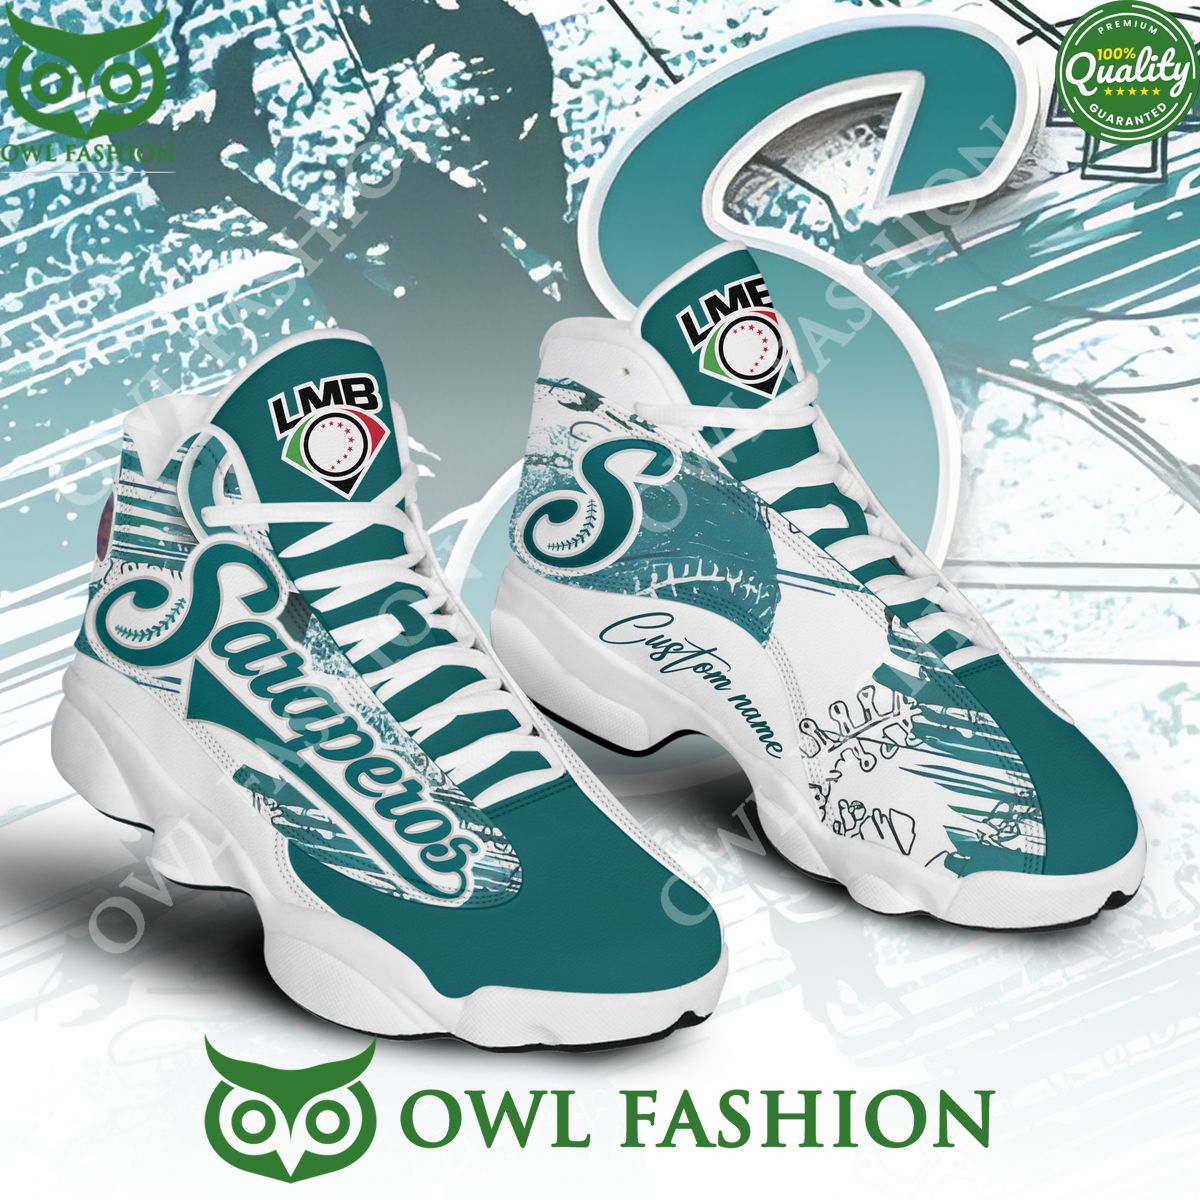 Baseball Mexican Saltillo LMB Personalized AJ13 Shoes Air Jordan